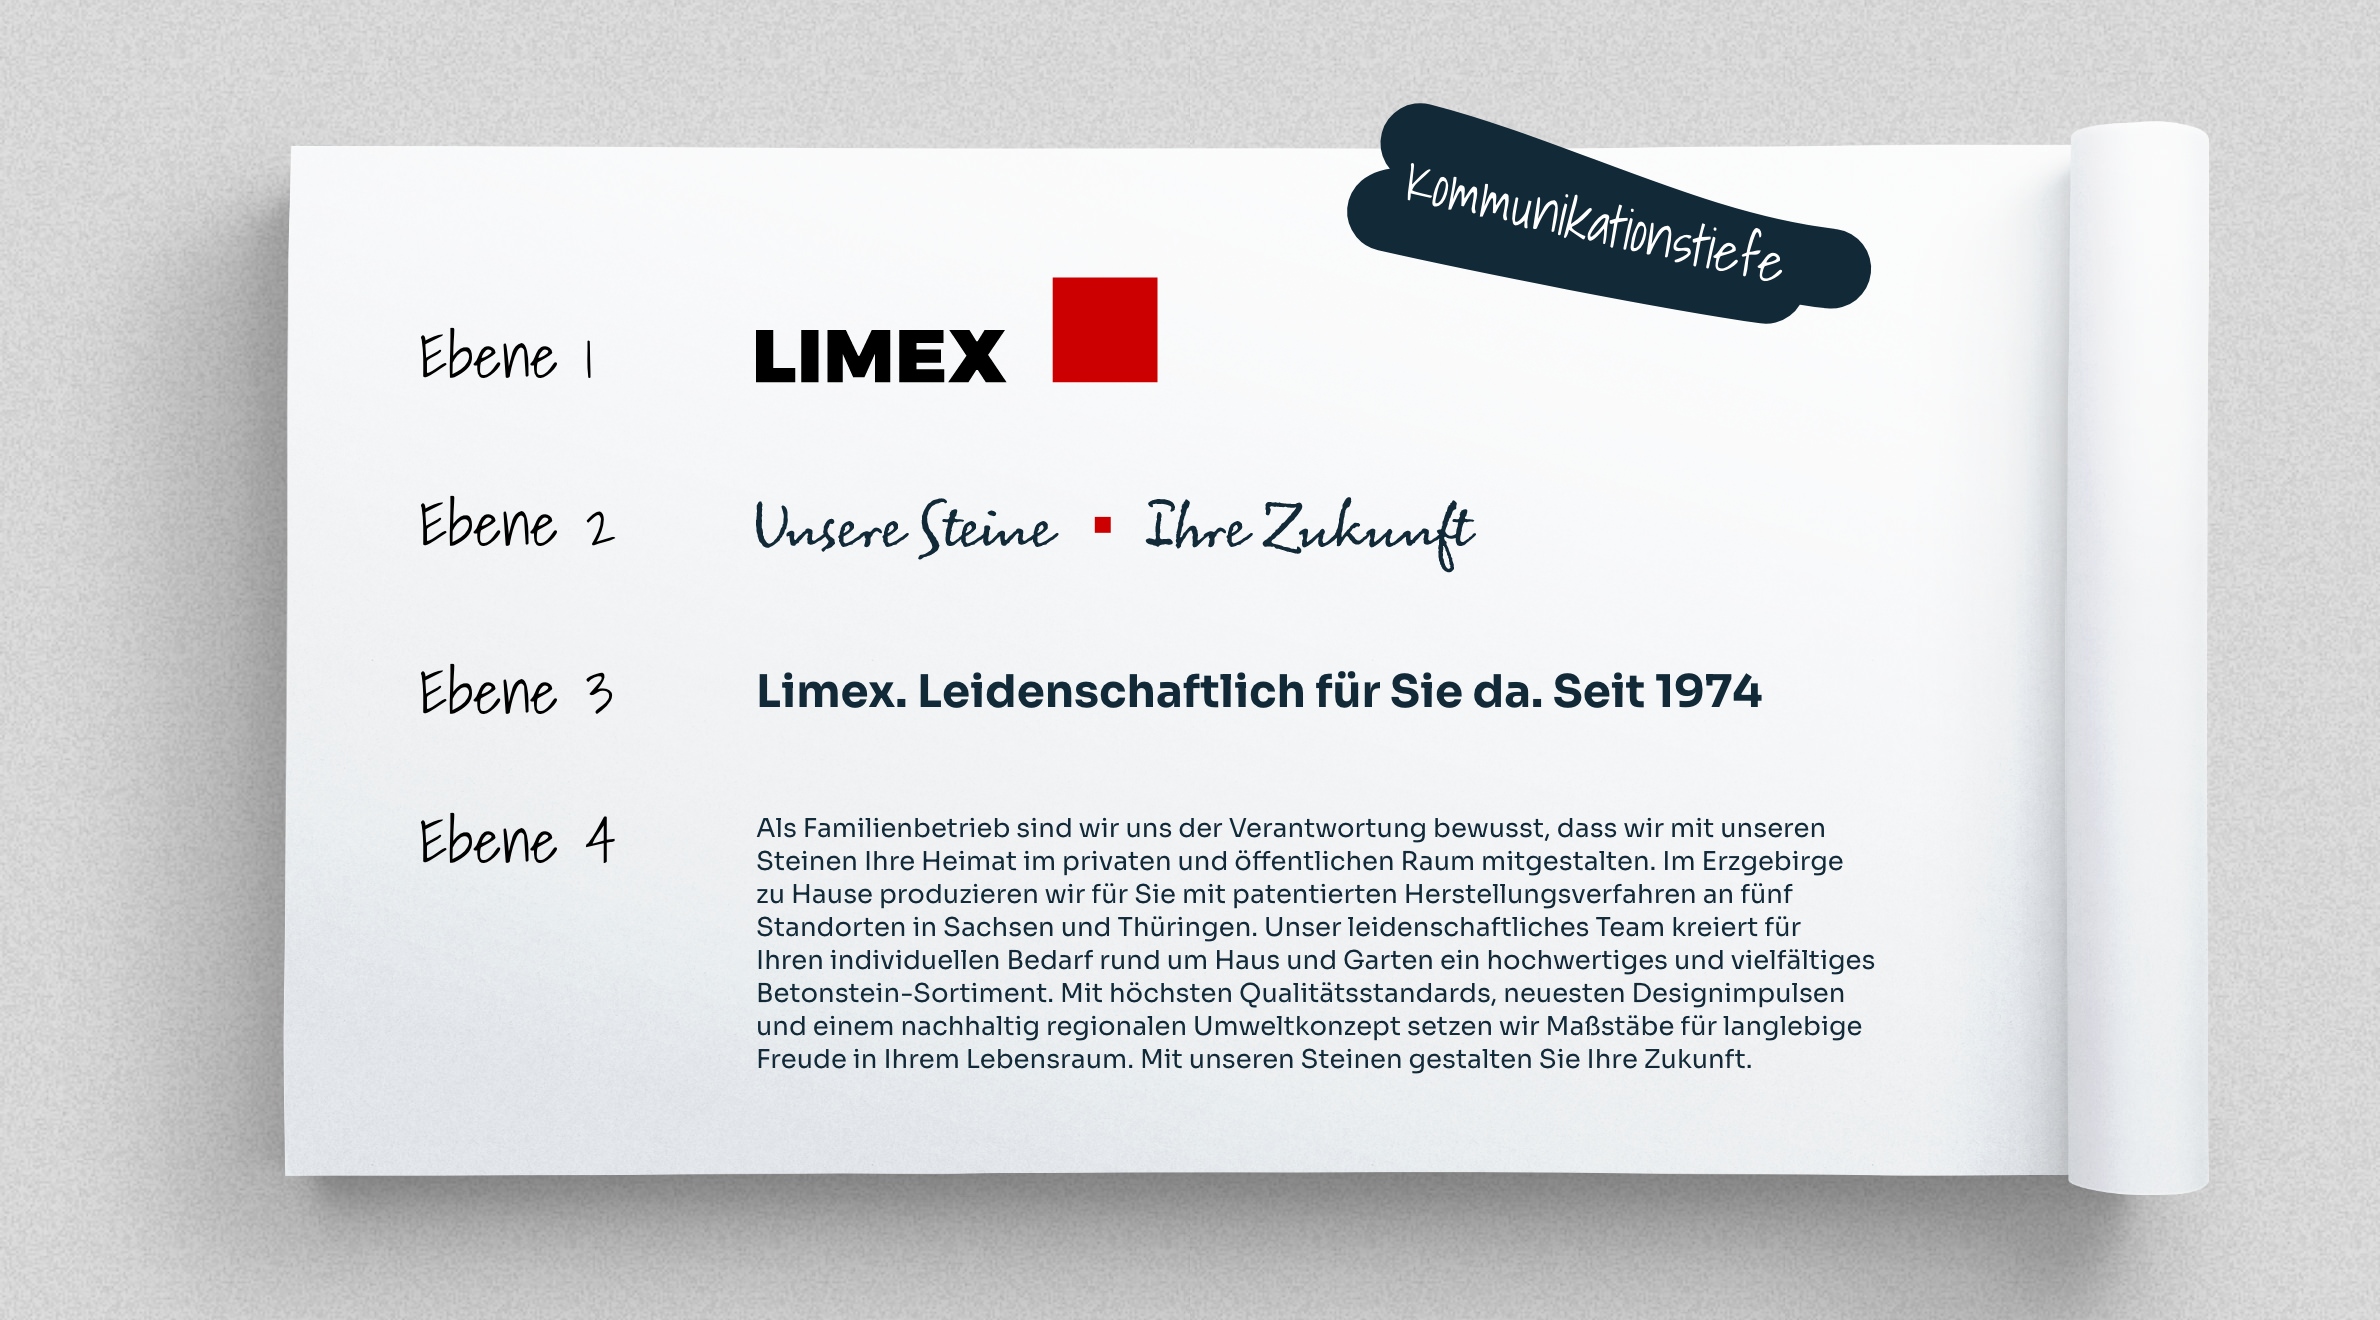 Limex, Wording - Kommunikationsebenen